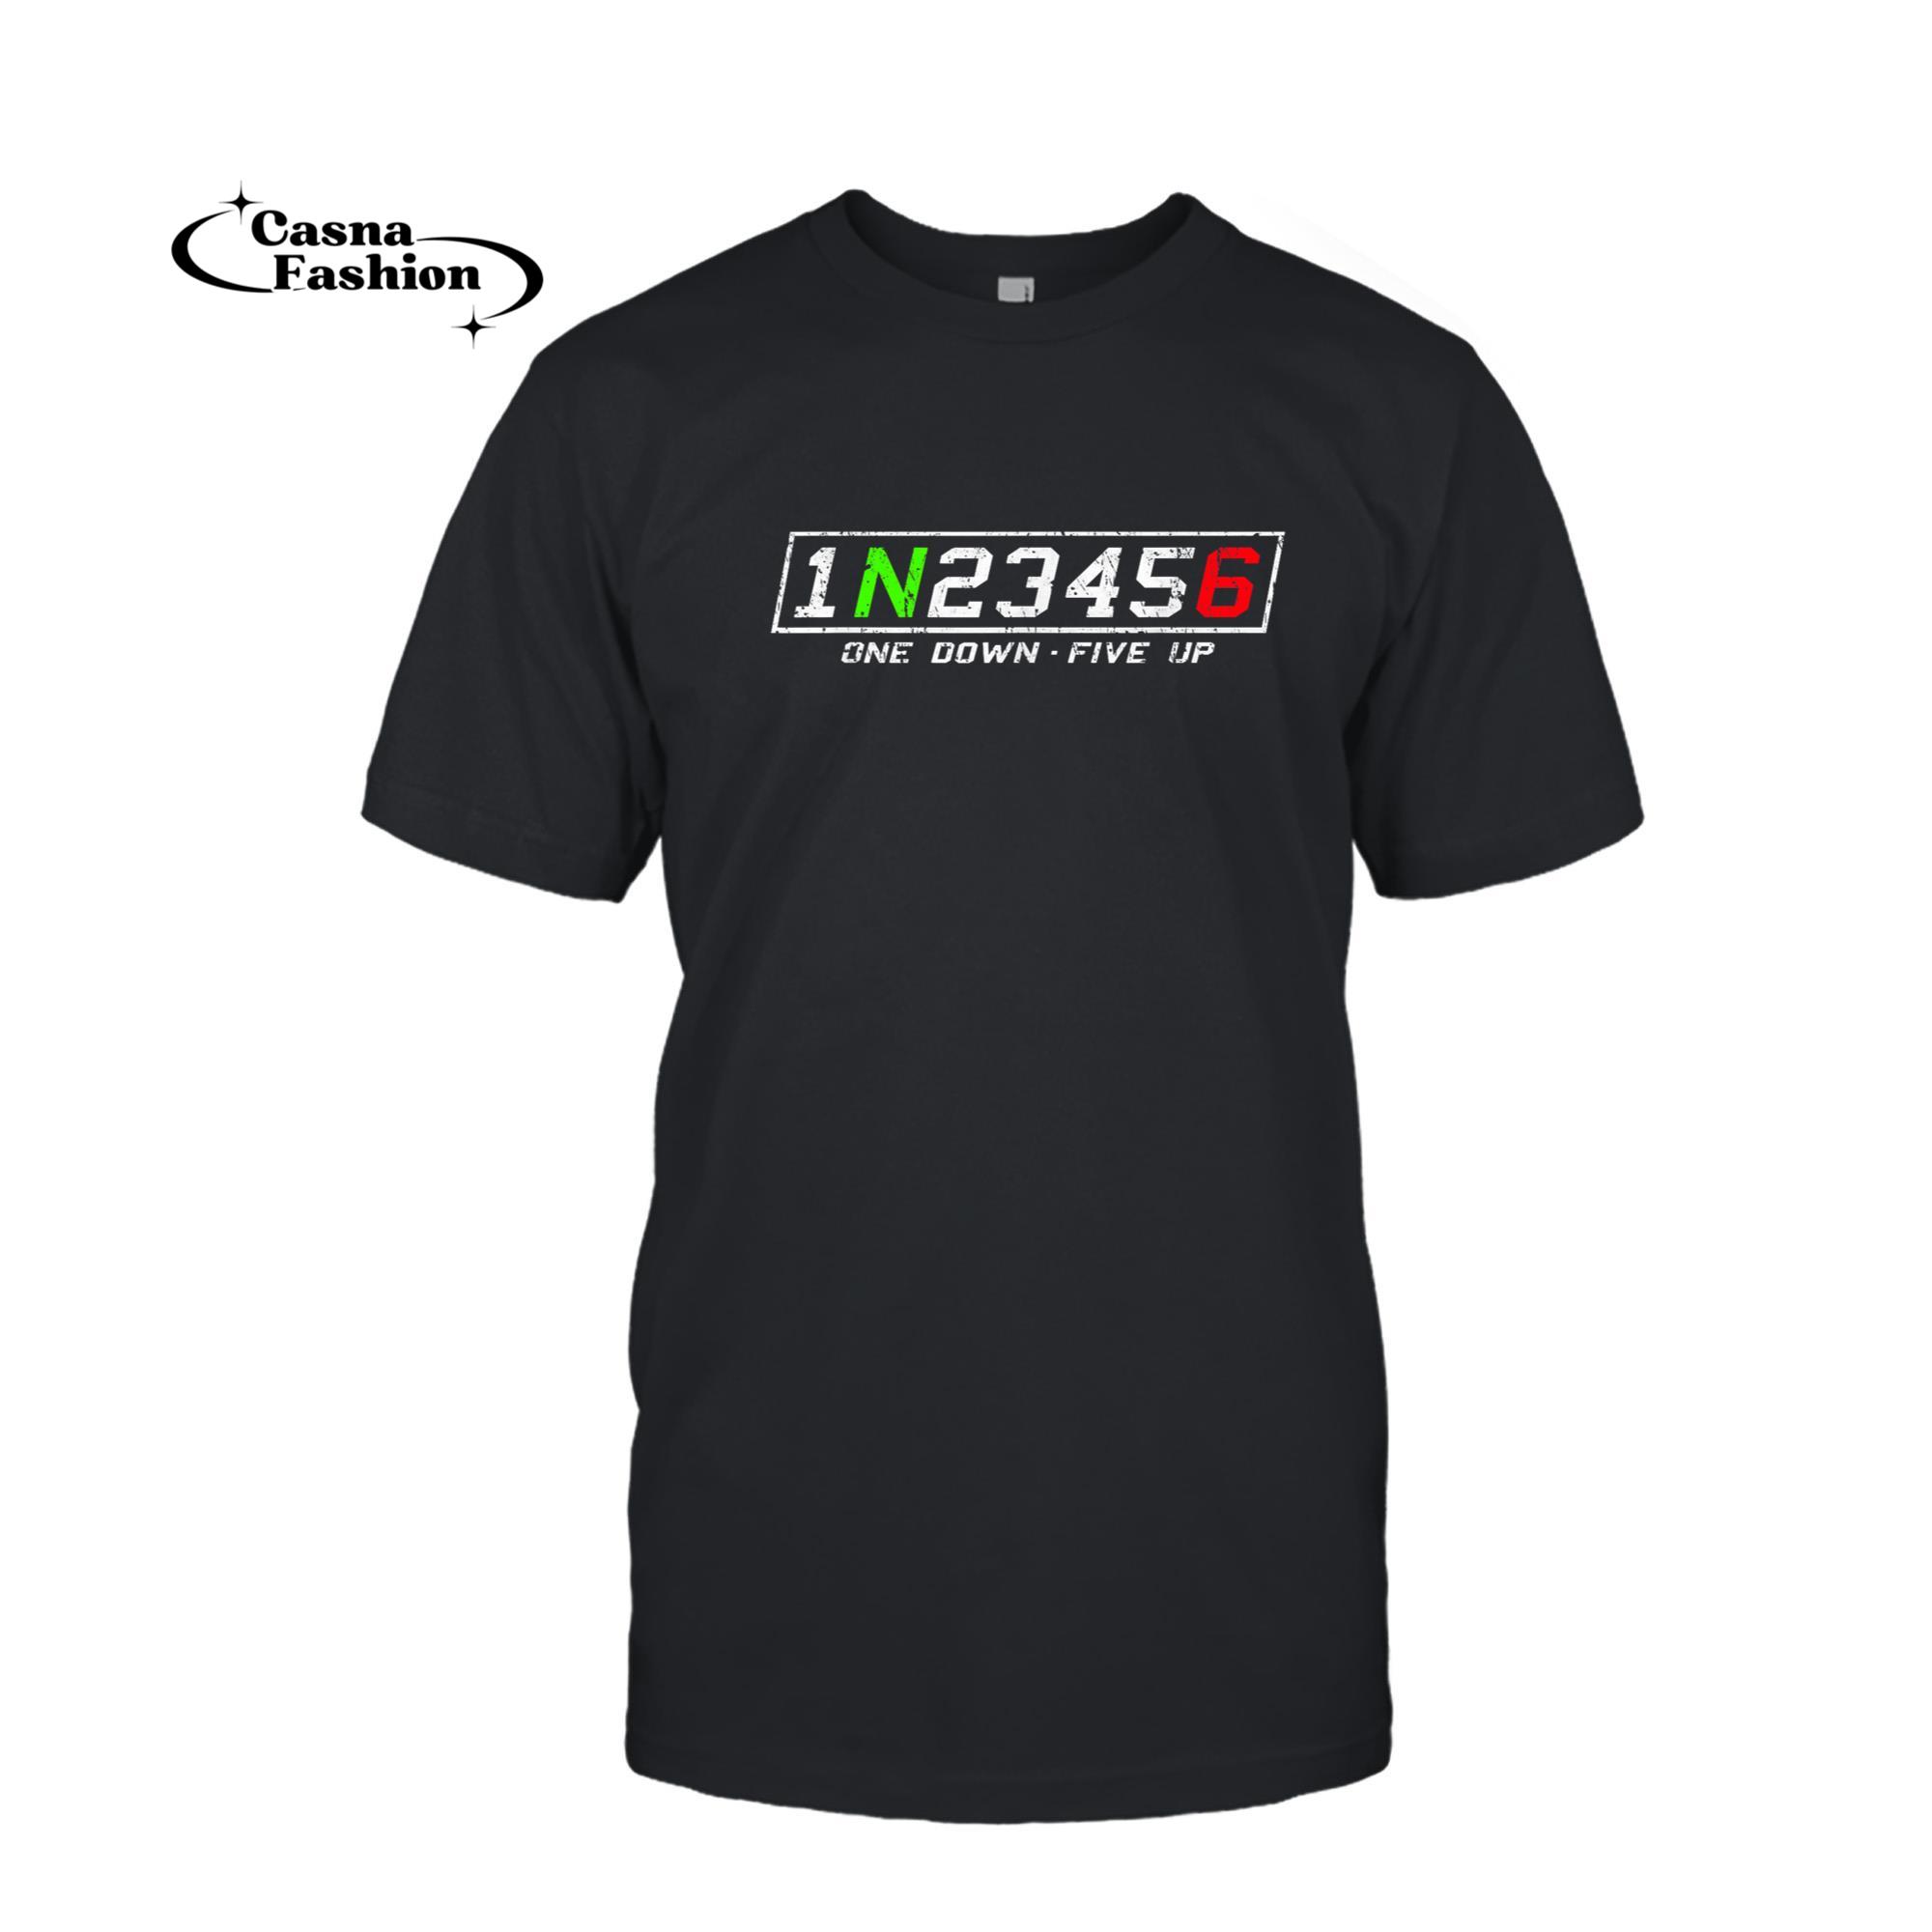 casnafashion_T-shirt_1n23456 Motorcycle Gear Shift Pattern for Biker Motorcyclist T-Shirt_T-shirt_Black